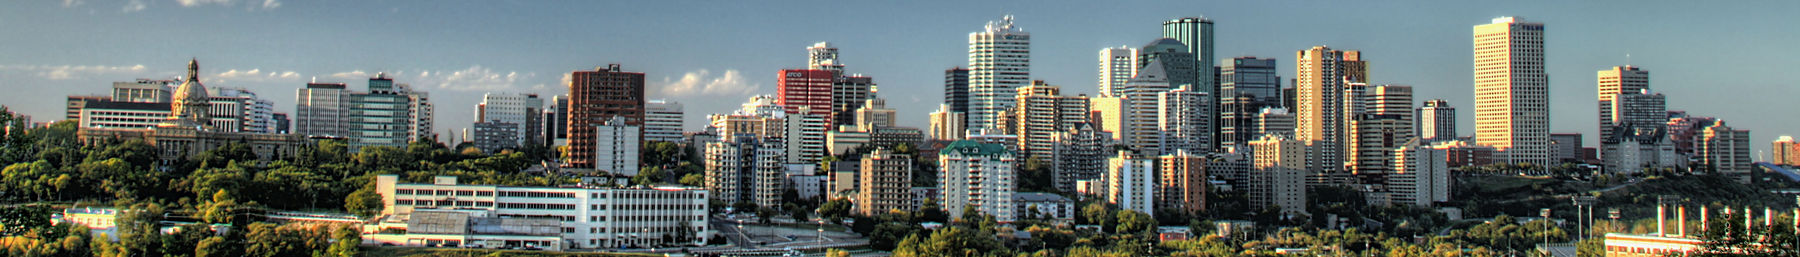 Edmonton banner.jpg